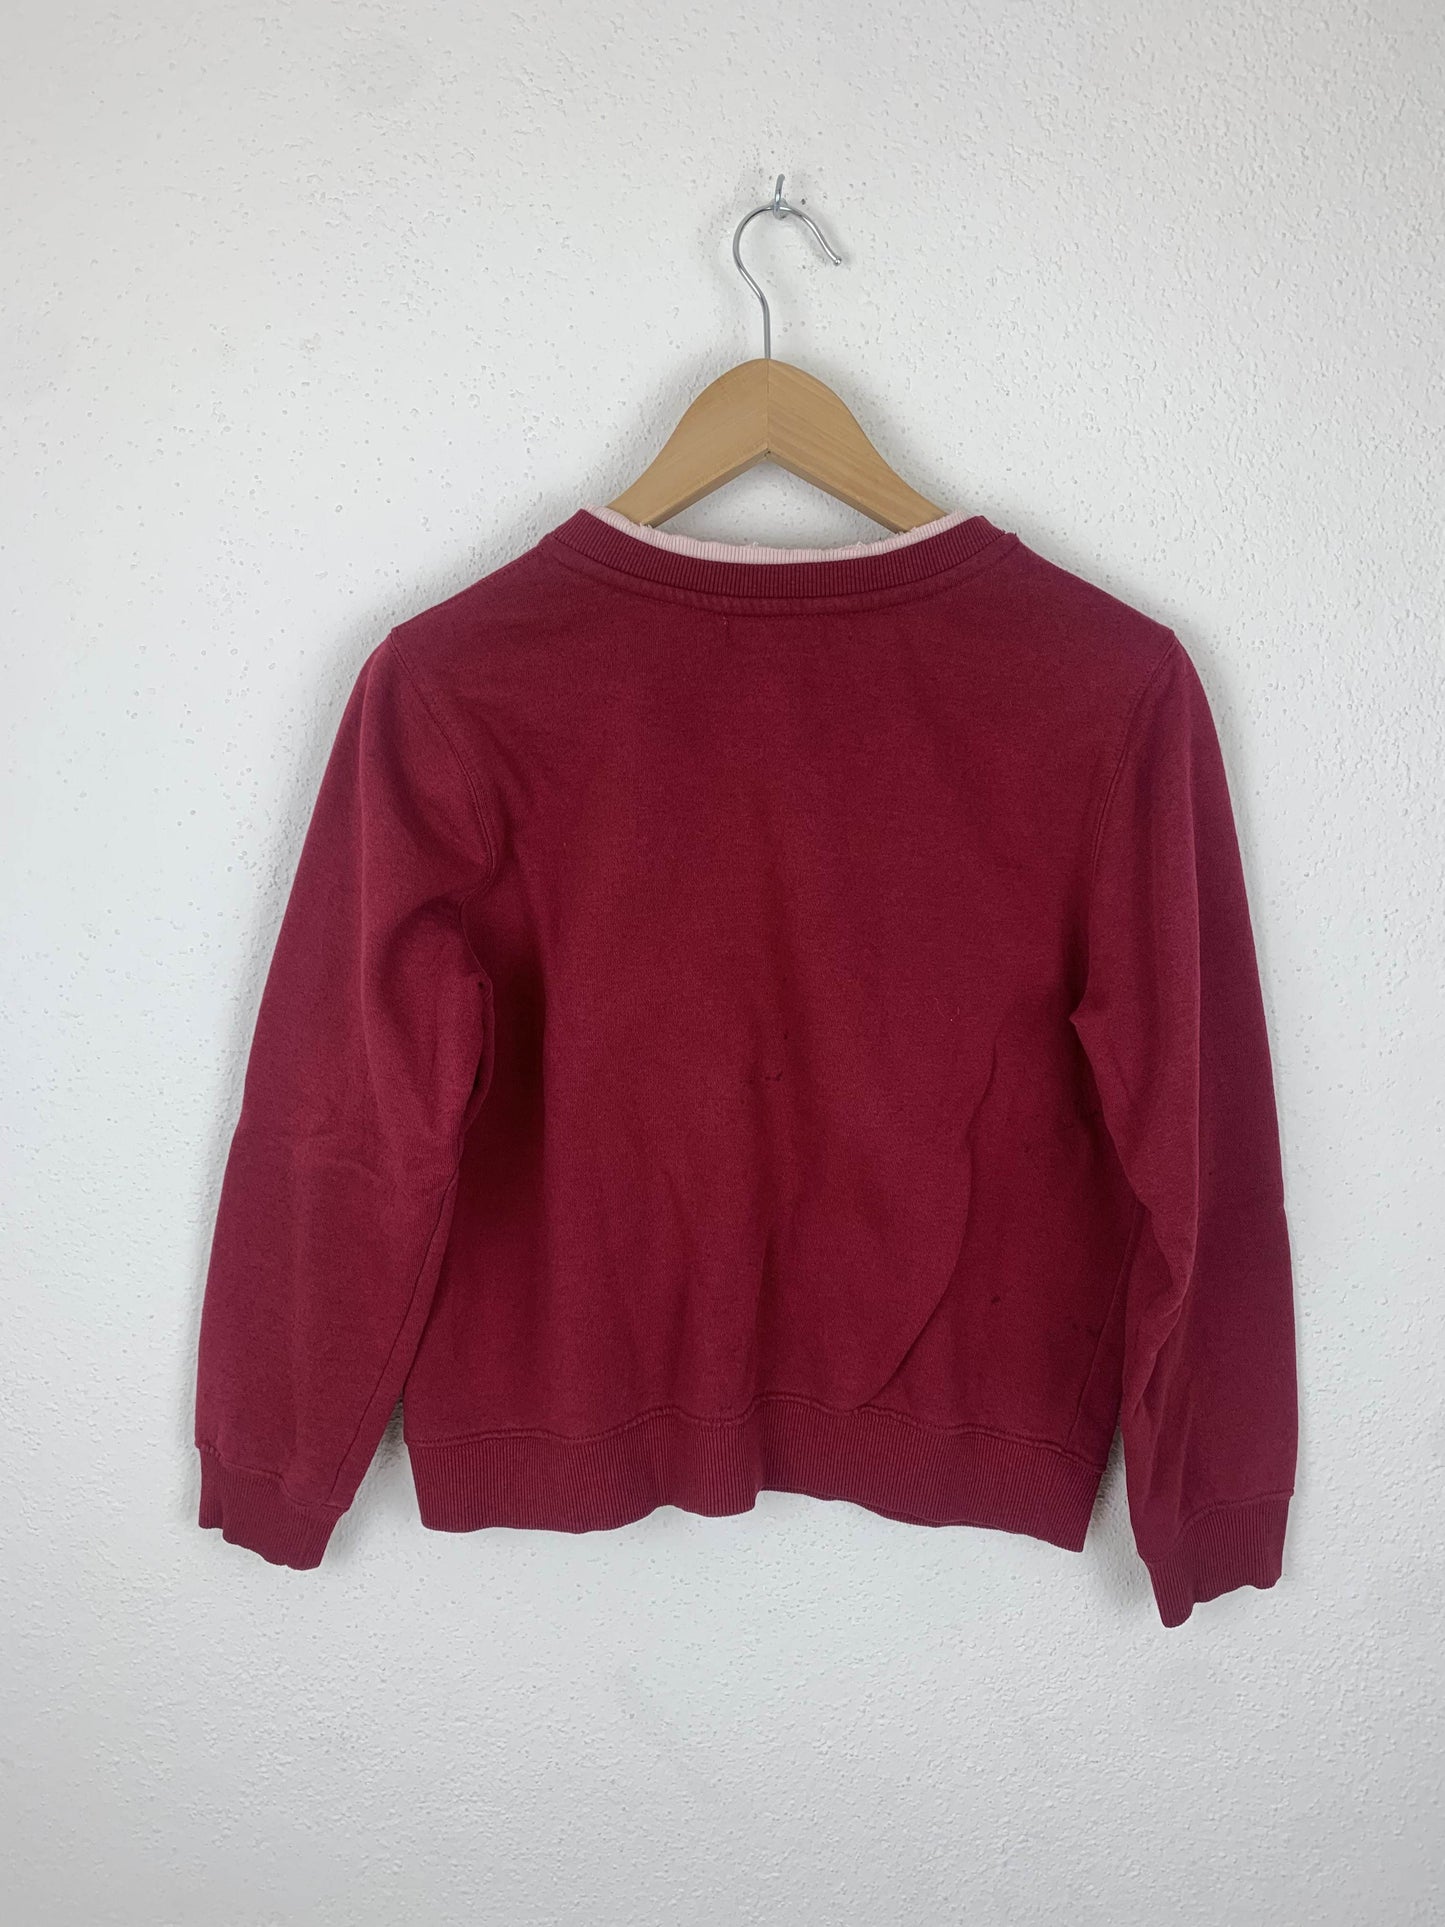 Vintage Sweater - XS.